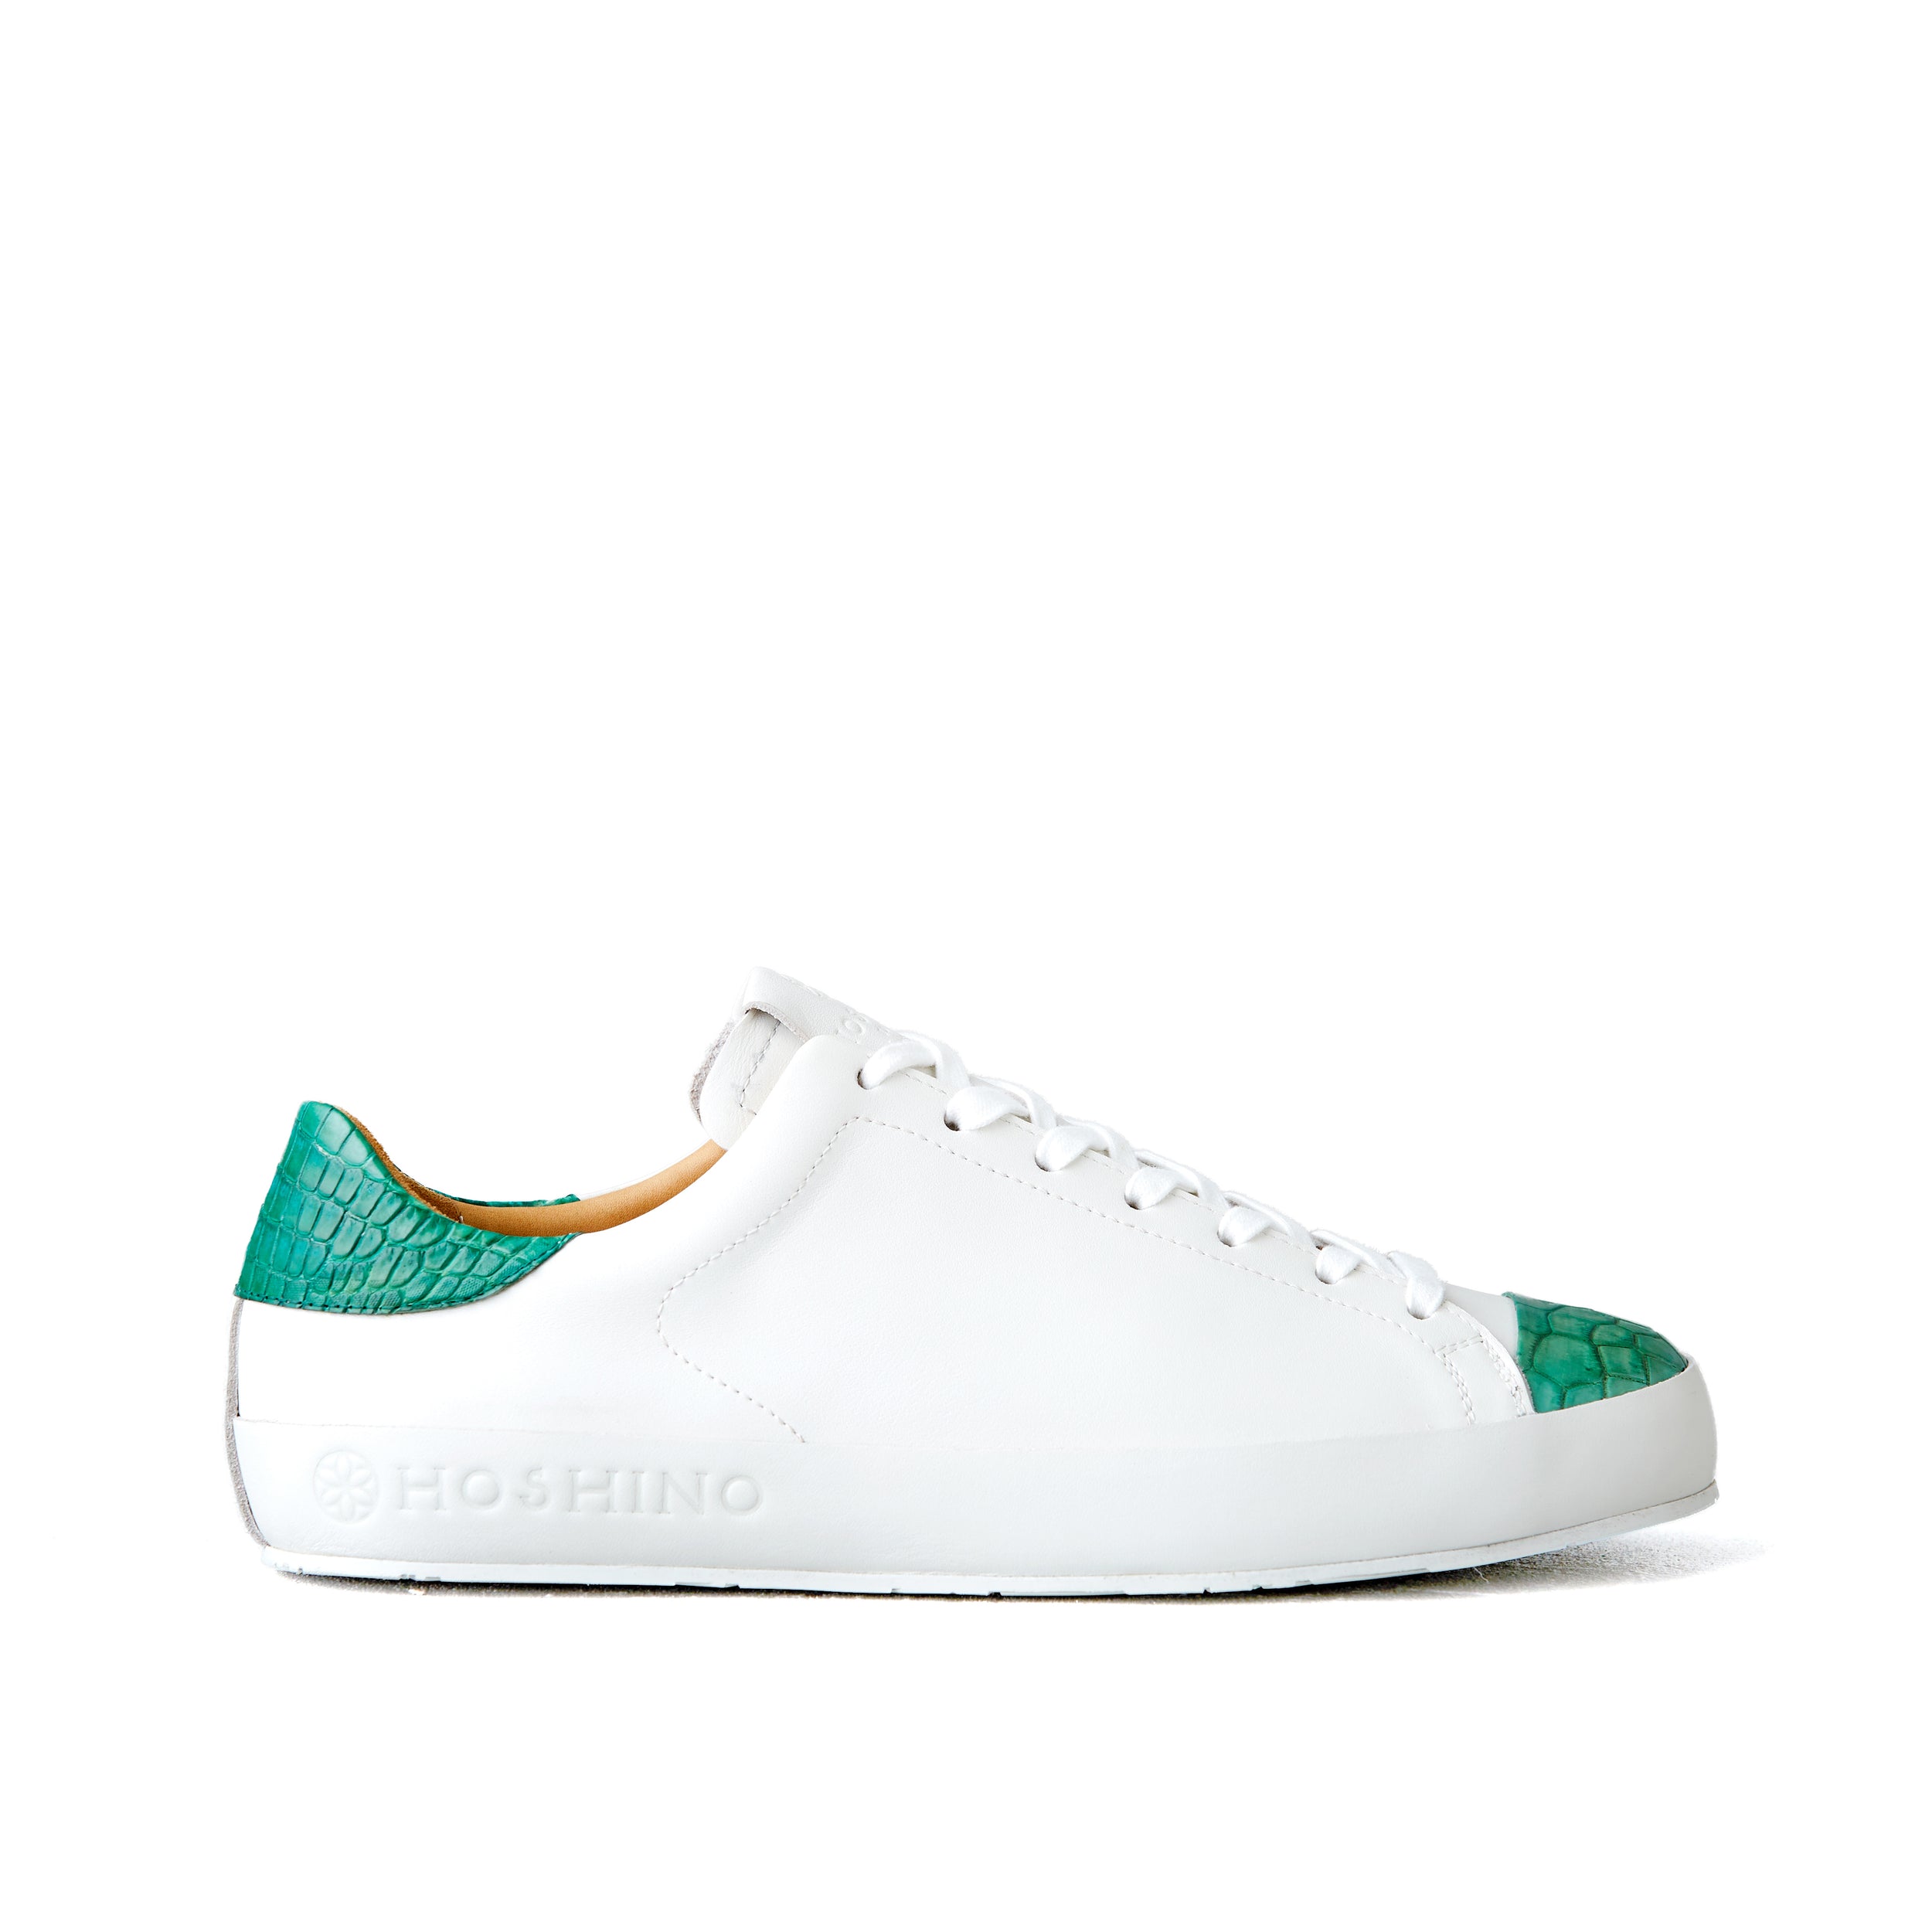 [women's] Liberte - low-top sneakers - combination toe white and green crocodile